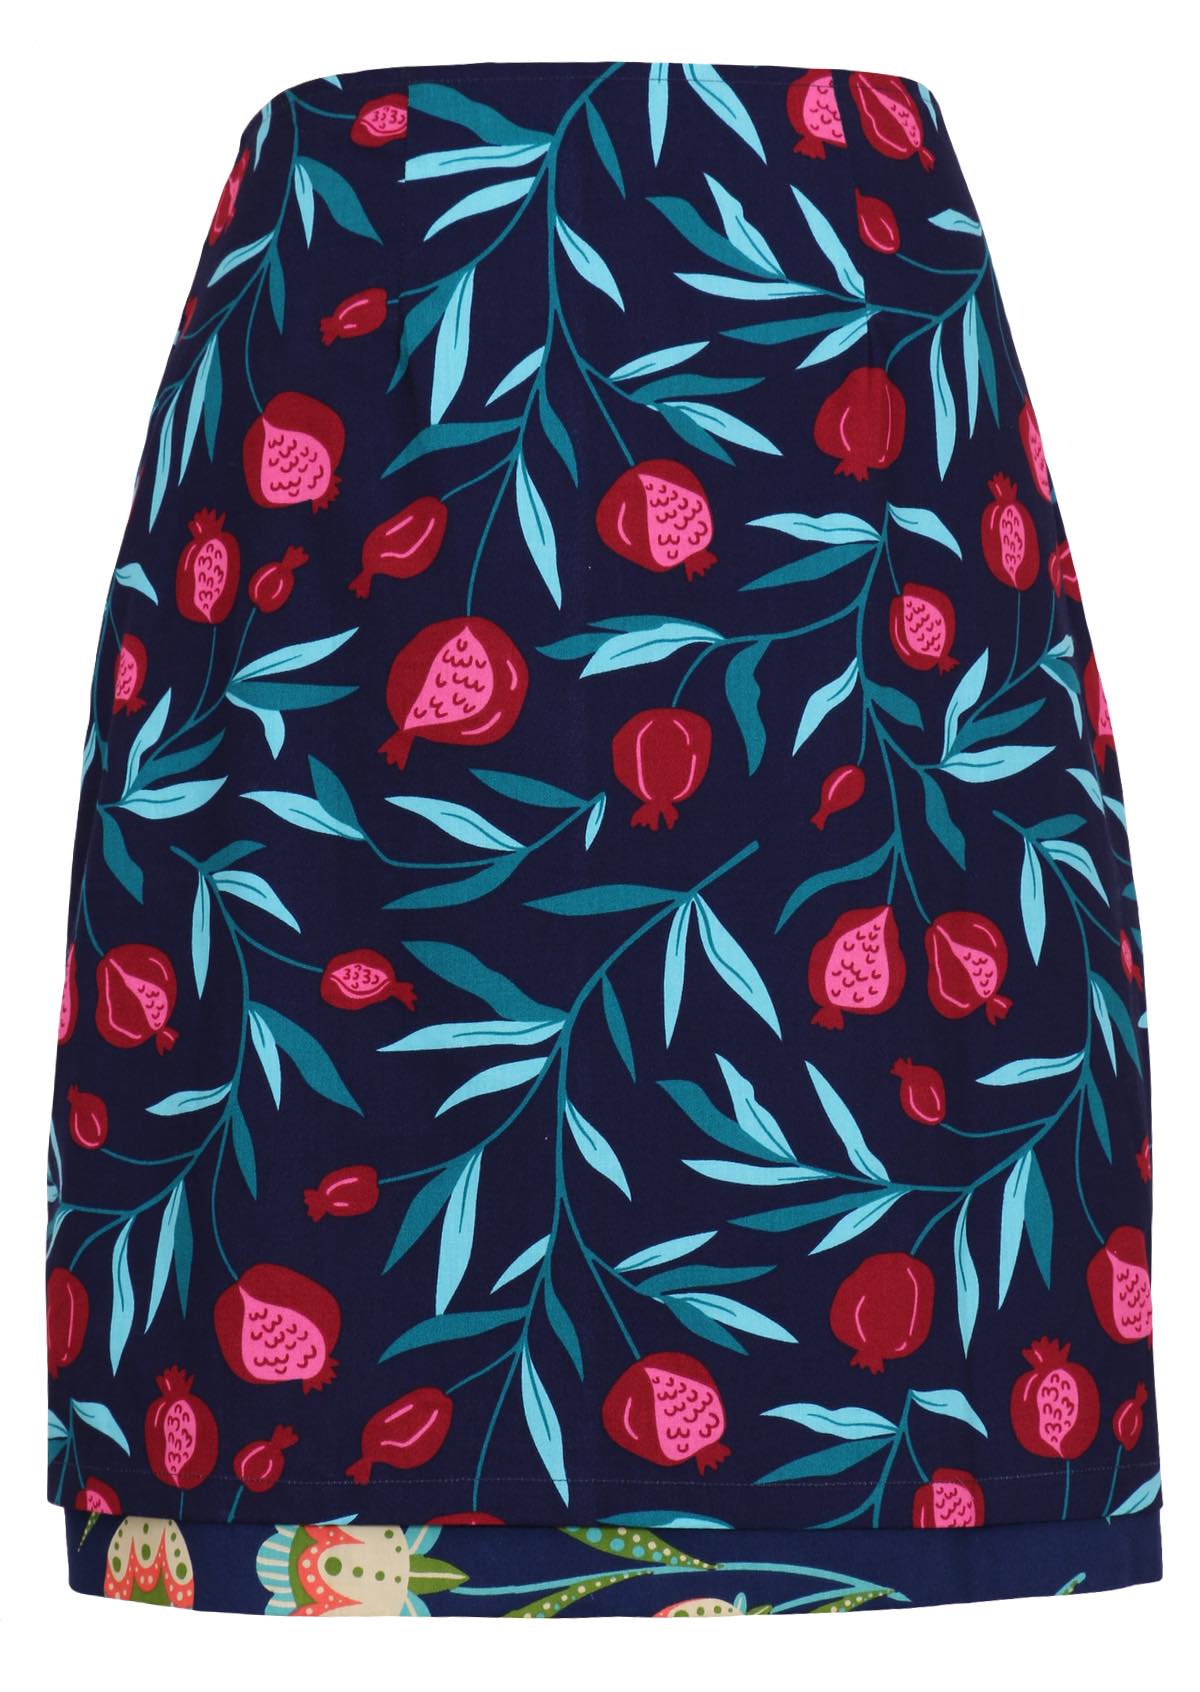 Reversible Skirt Pomegranate print front mannequin pic